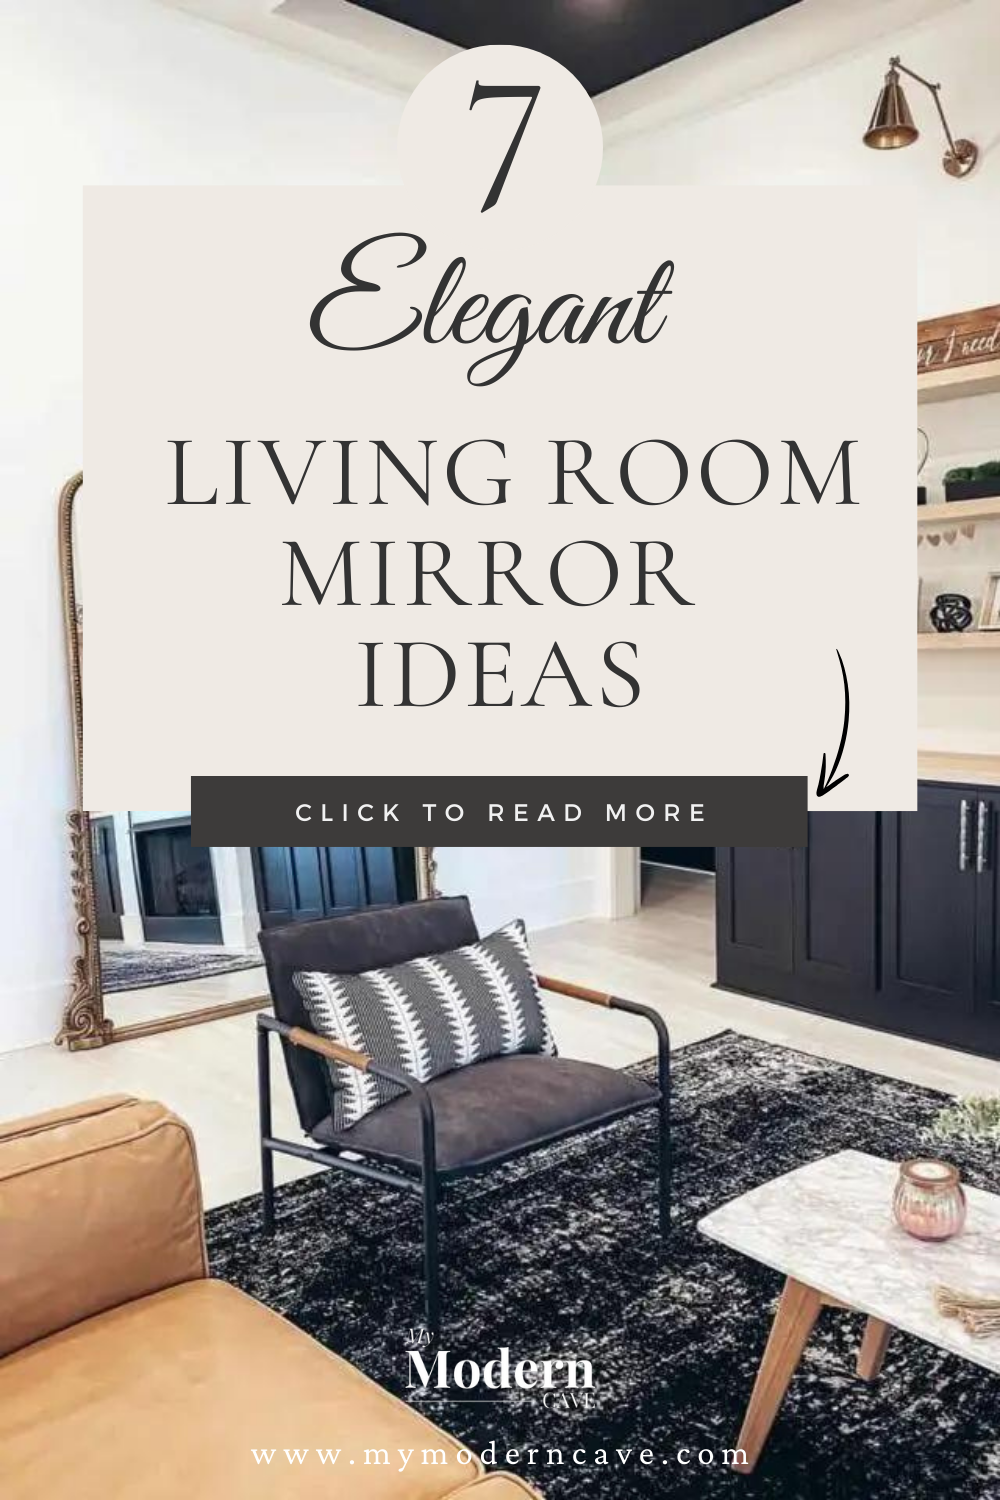 Living Room Mirror Ideas Infographic